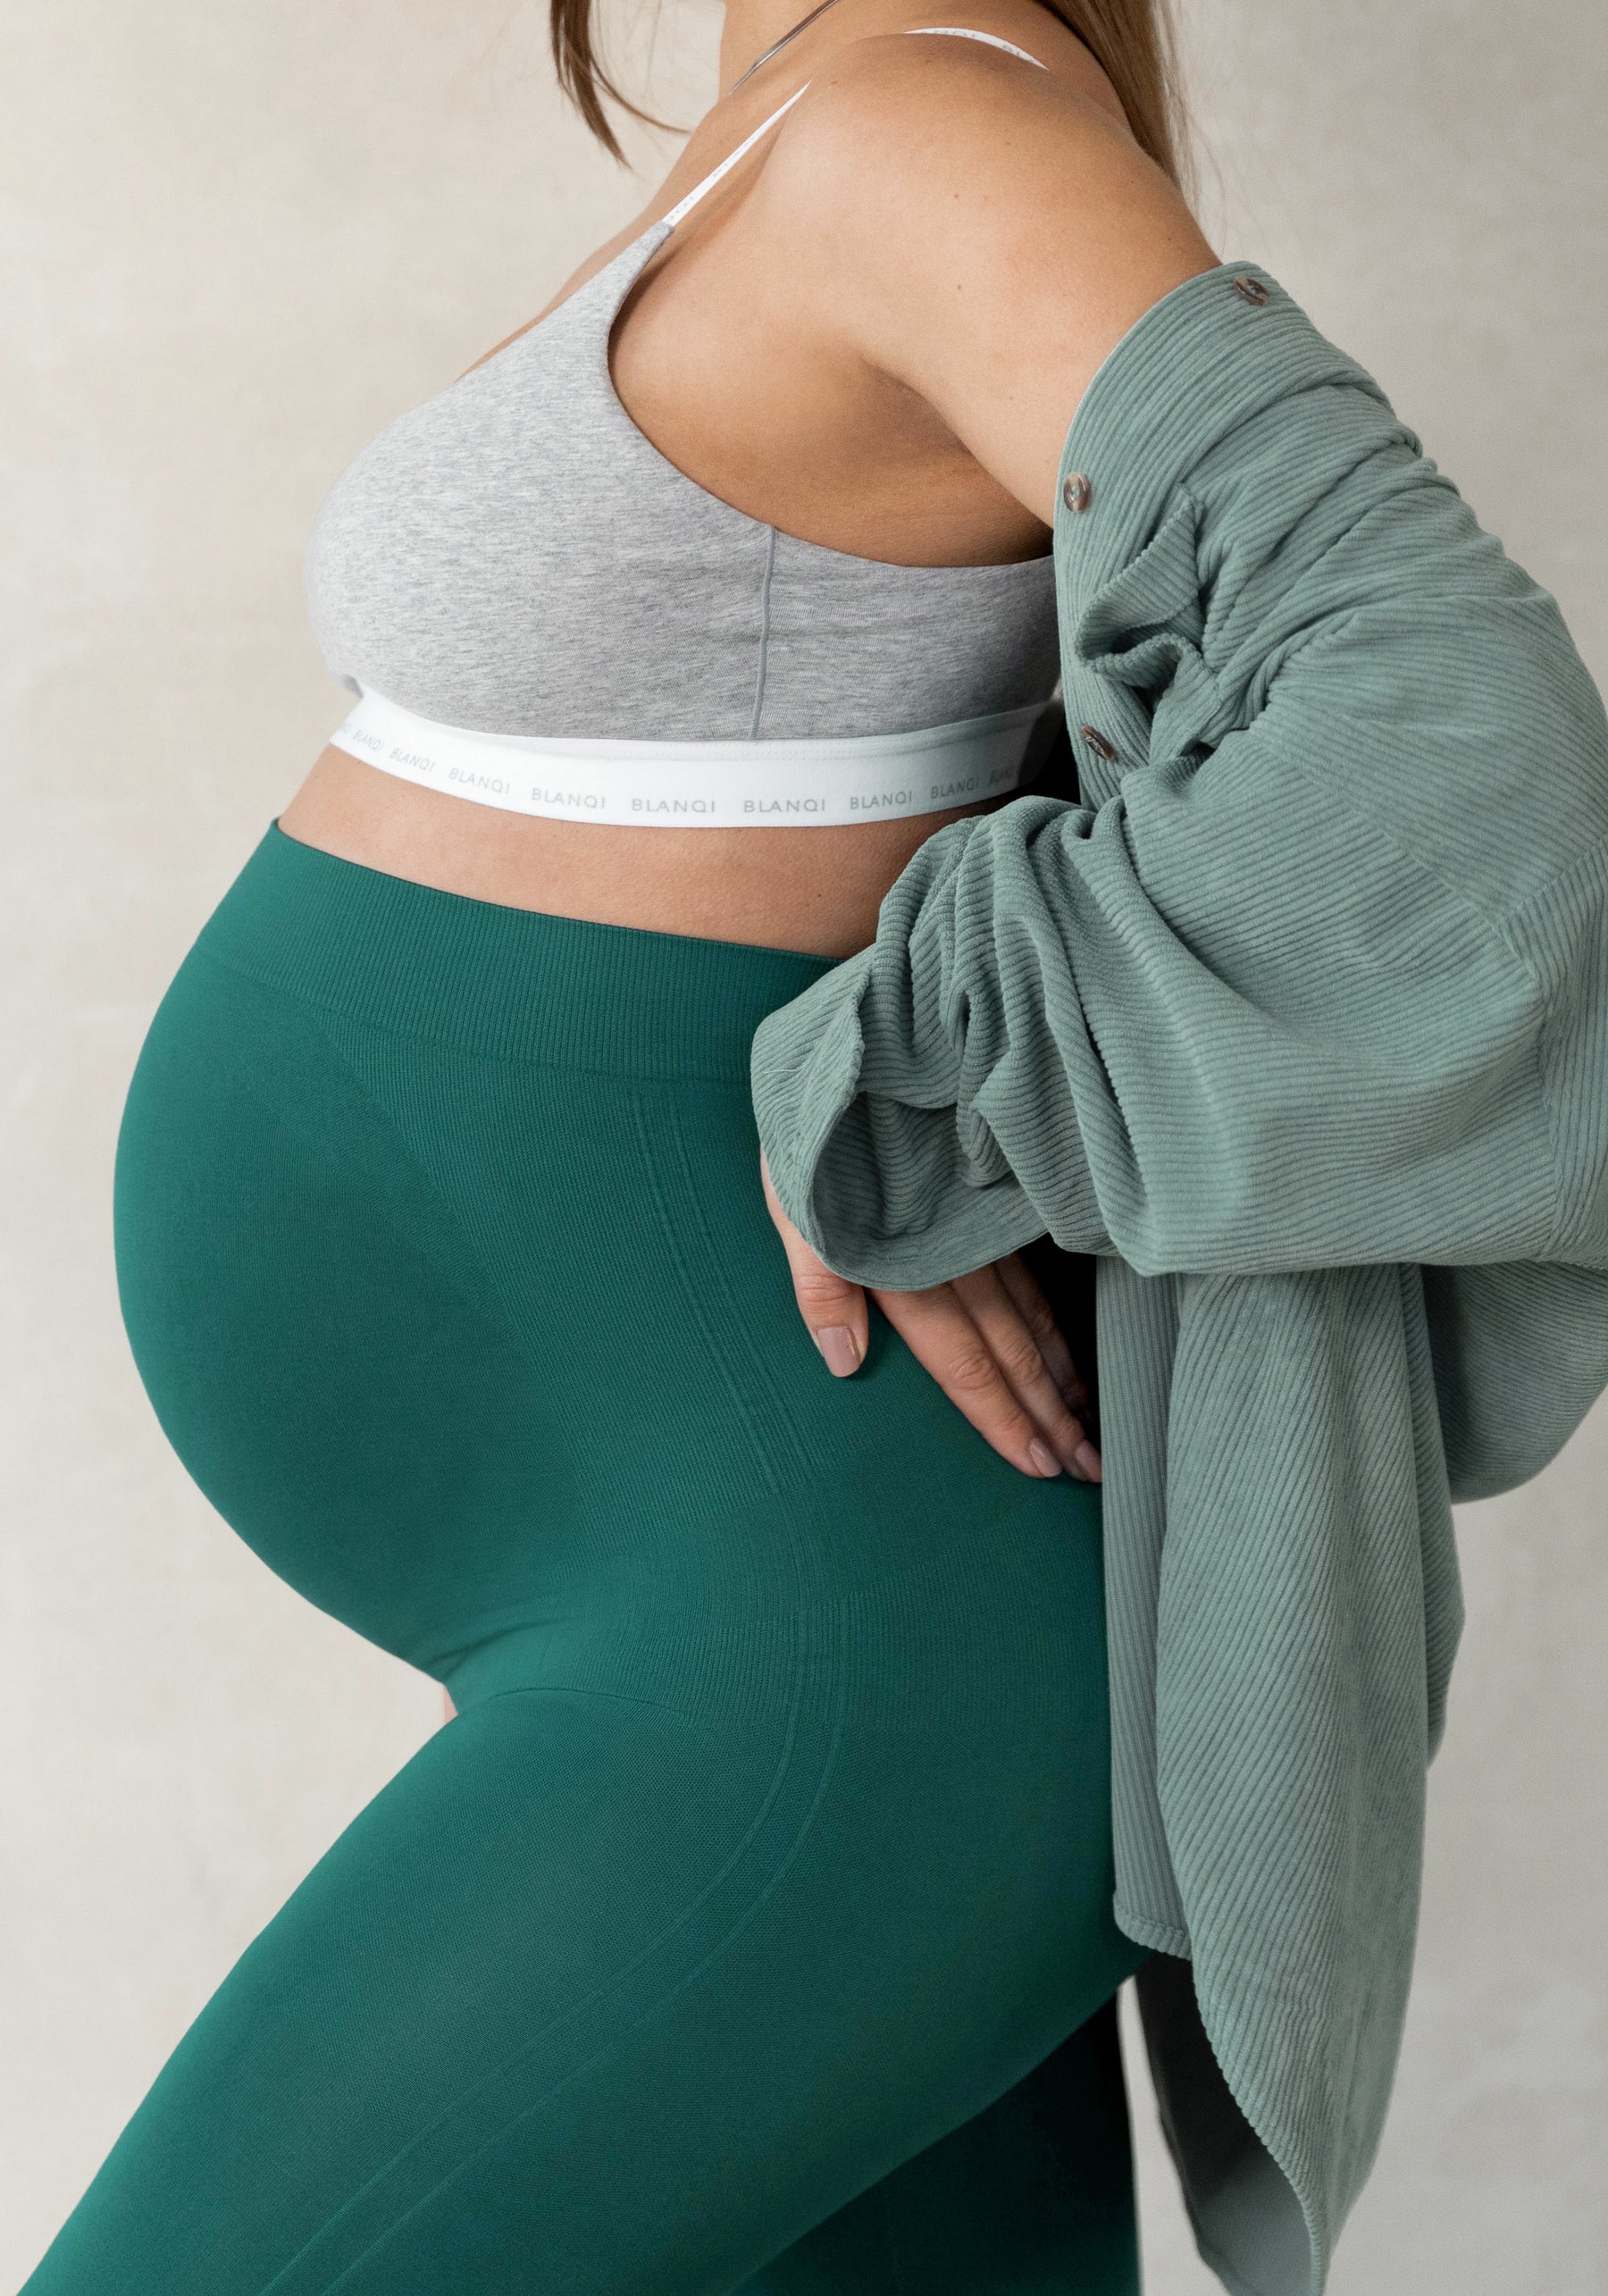 Kiplyki Wholesale Elastic Belly Protection Maternity Pregnant Leggings  Pants Trousers Pencil Pants